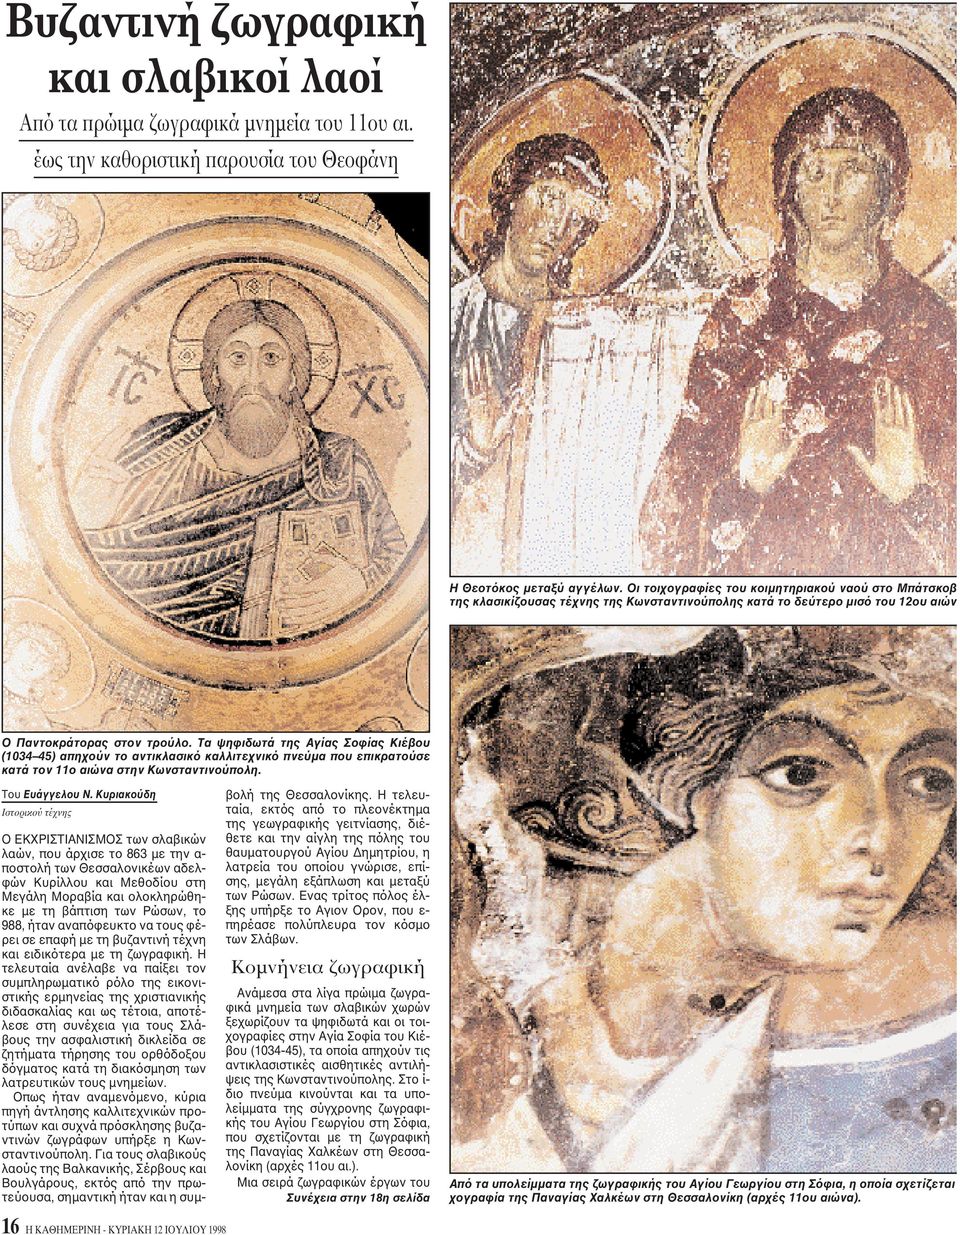 Tα ψηφιδωτά της Aγίας Σοφίας Kιέβου (1034 45) απηχούν το αντικλασικό καλλιτεχνικό πνεύμα που επικρατούσε κατά τον 11ο αιώνα στην Kωνσταντινούπολη. Tου Eυάγγελου N.